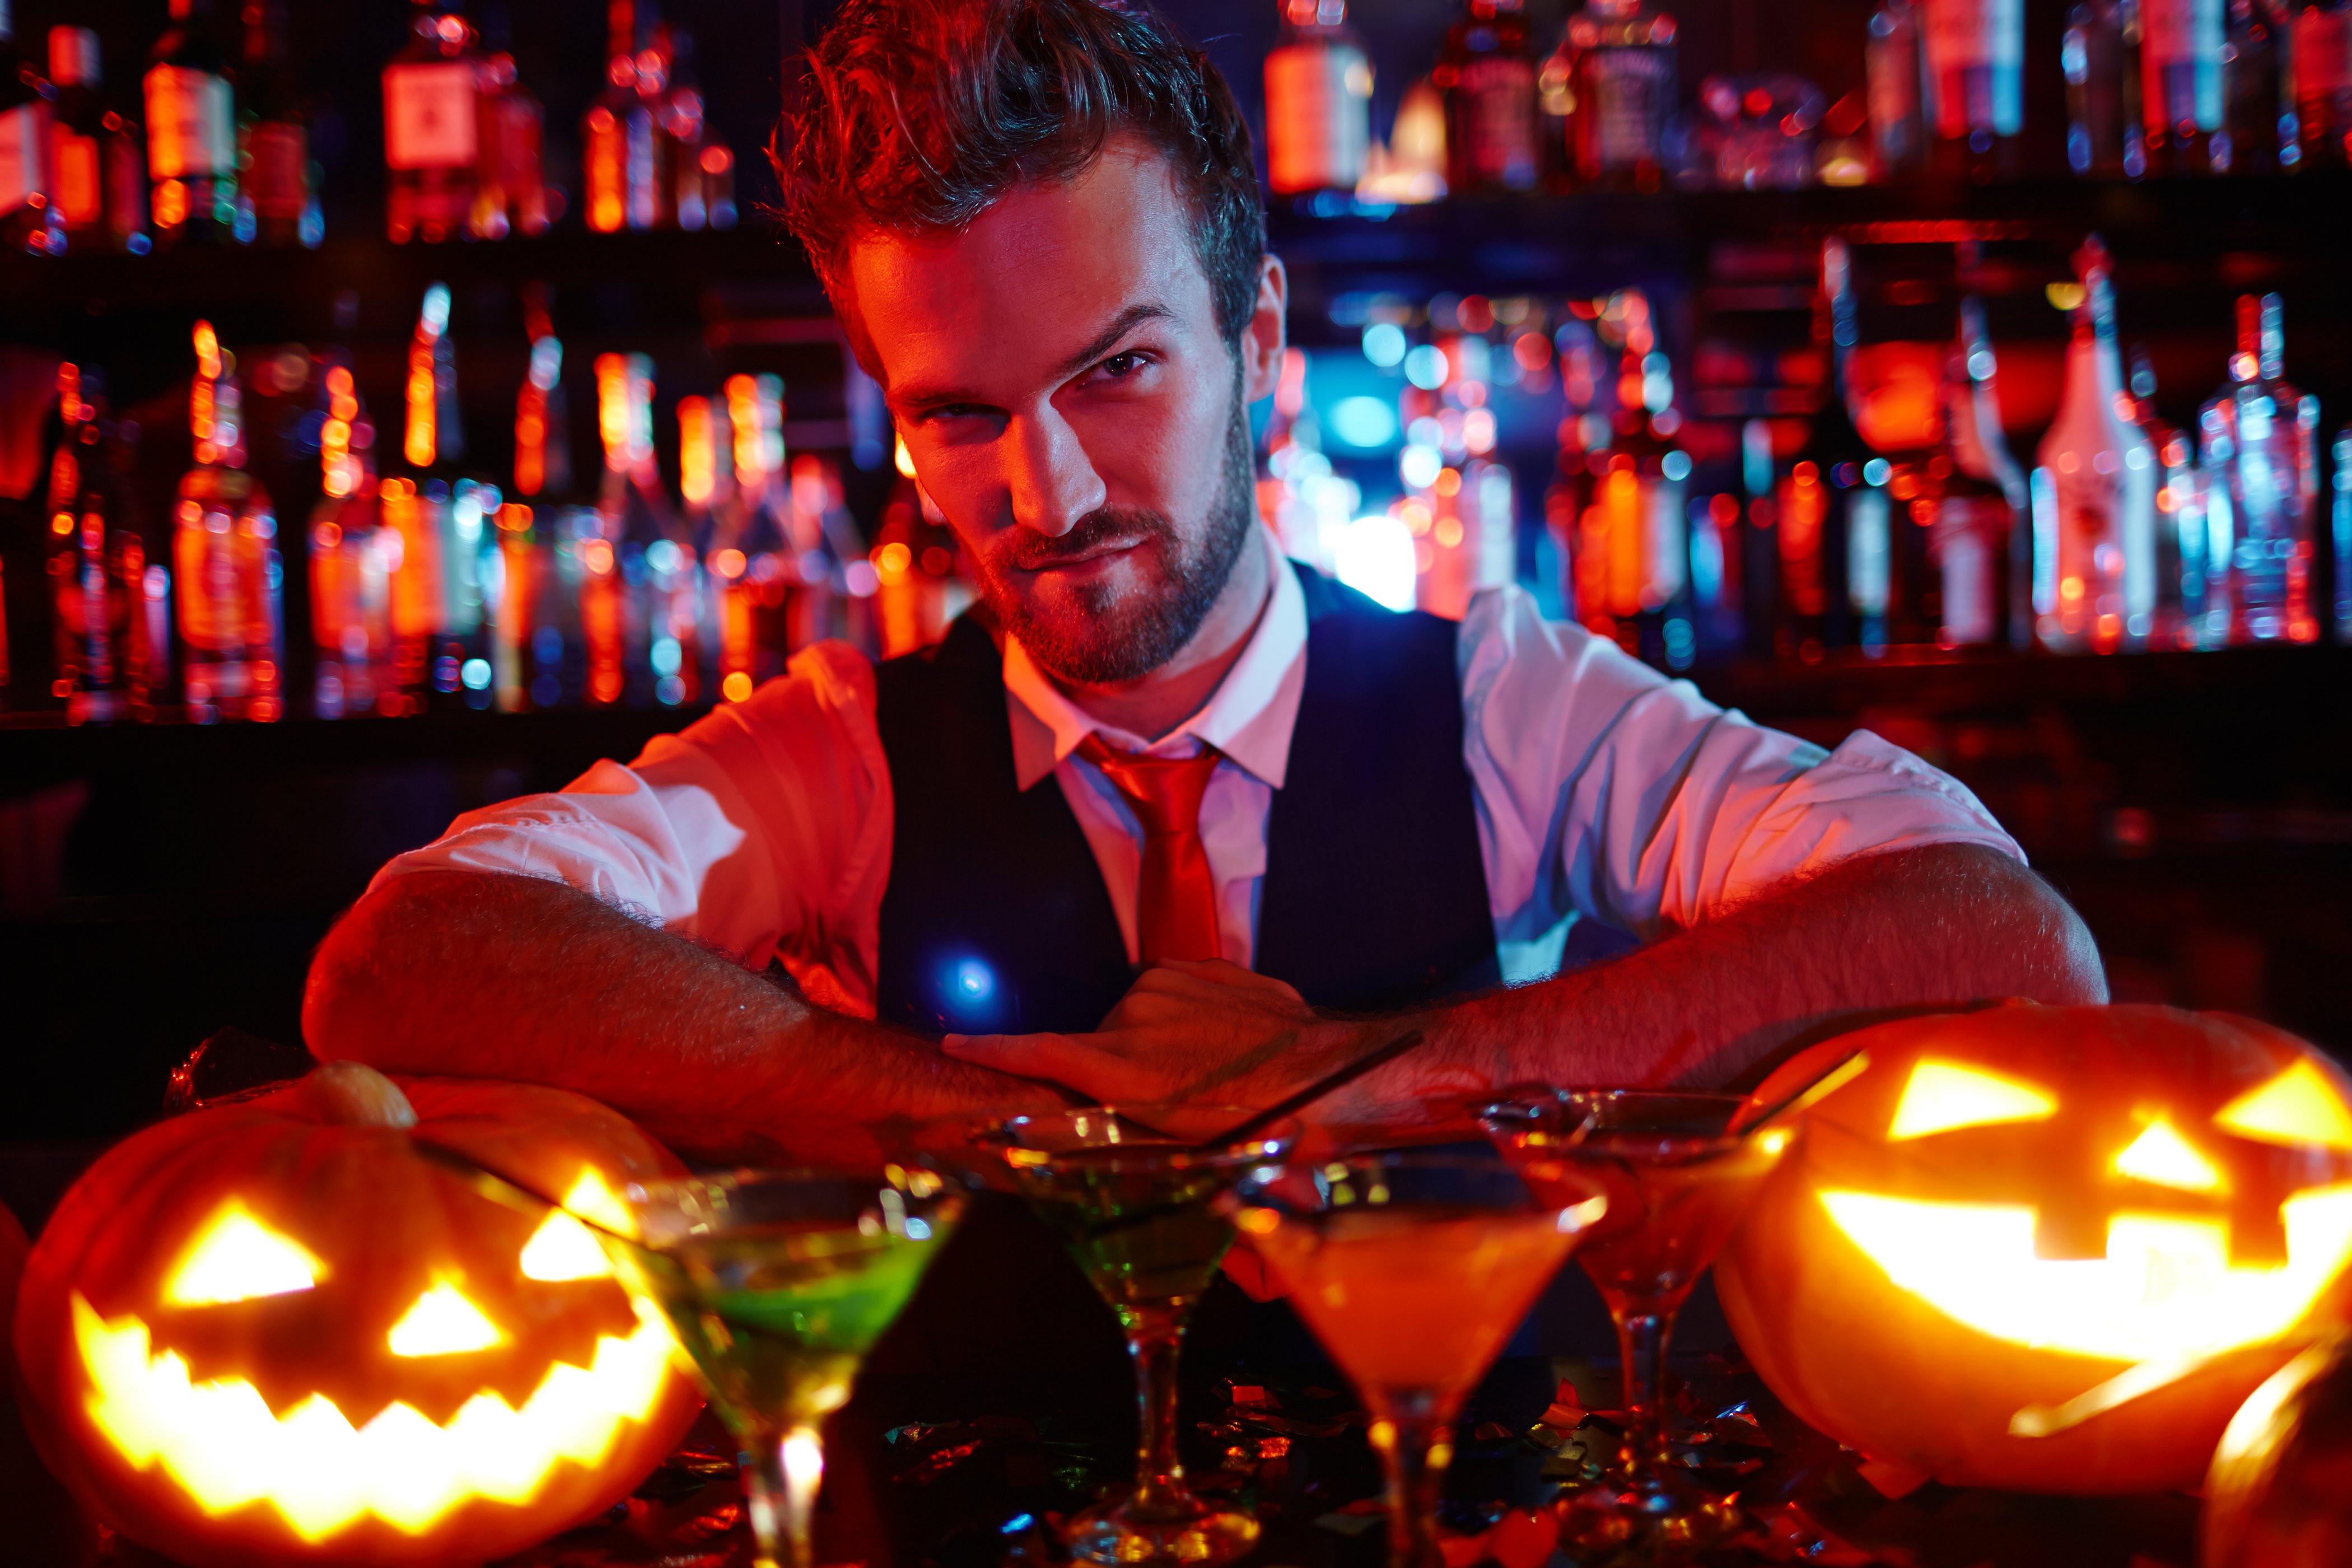 A Spooky Bar